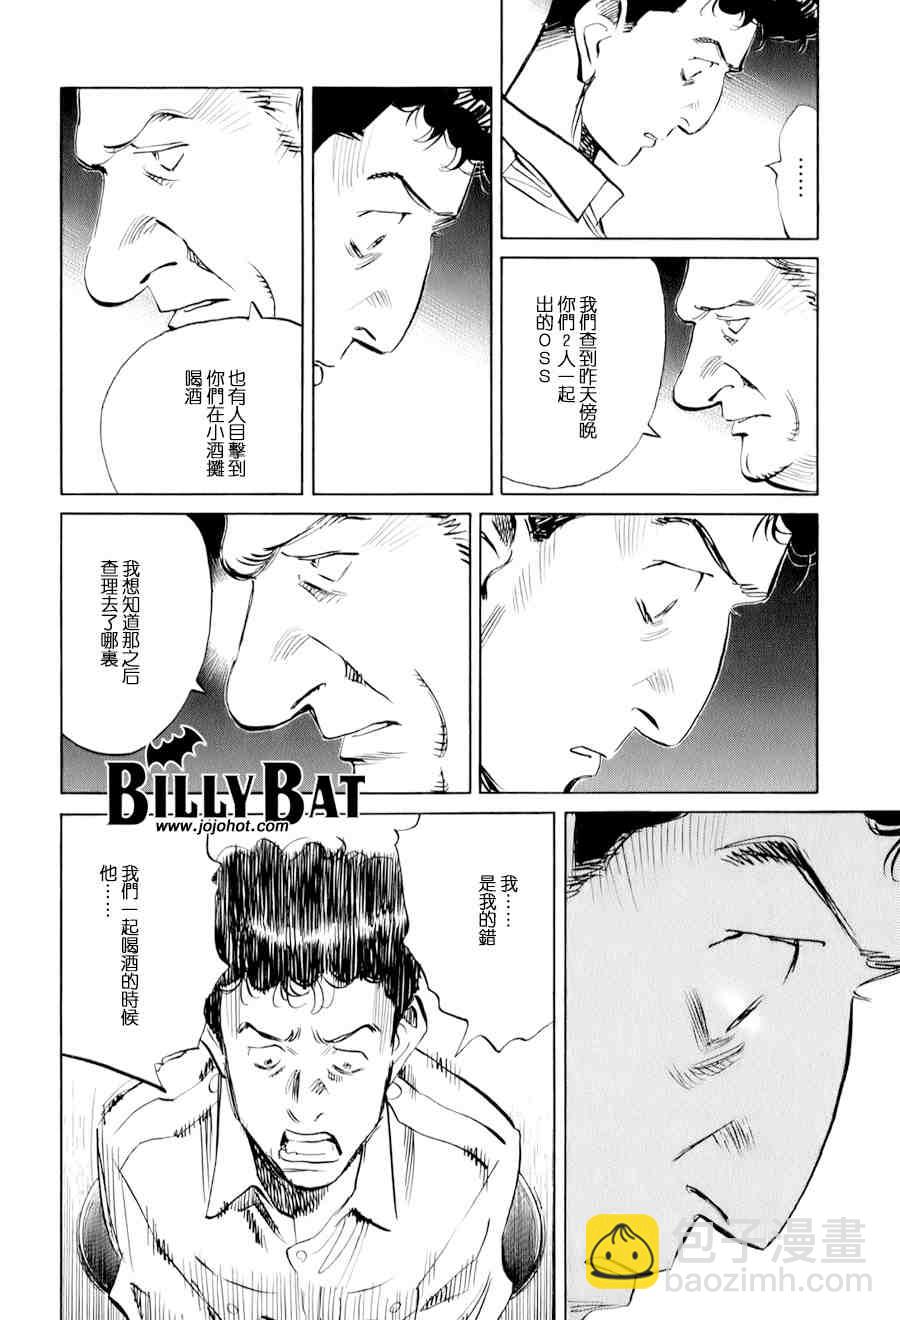 Billy_Bat - 第6话 - 5